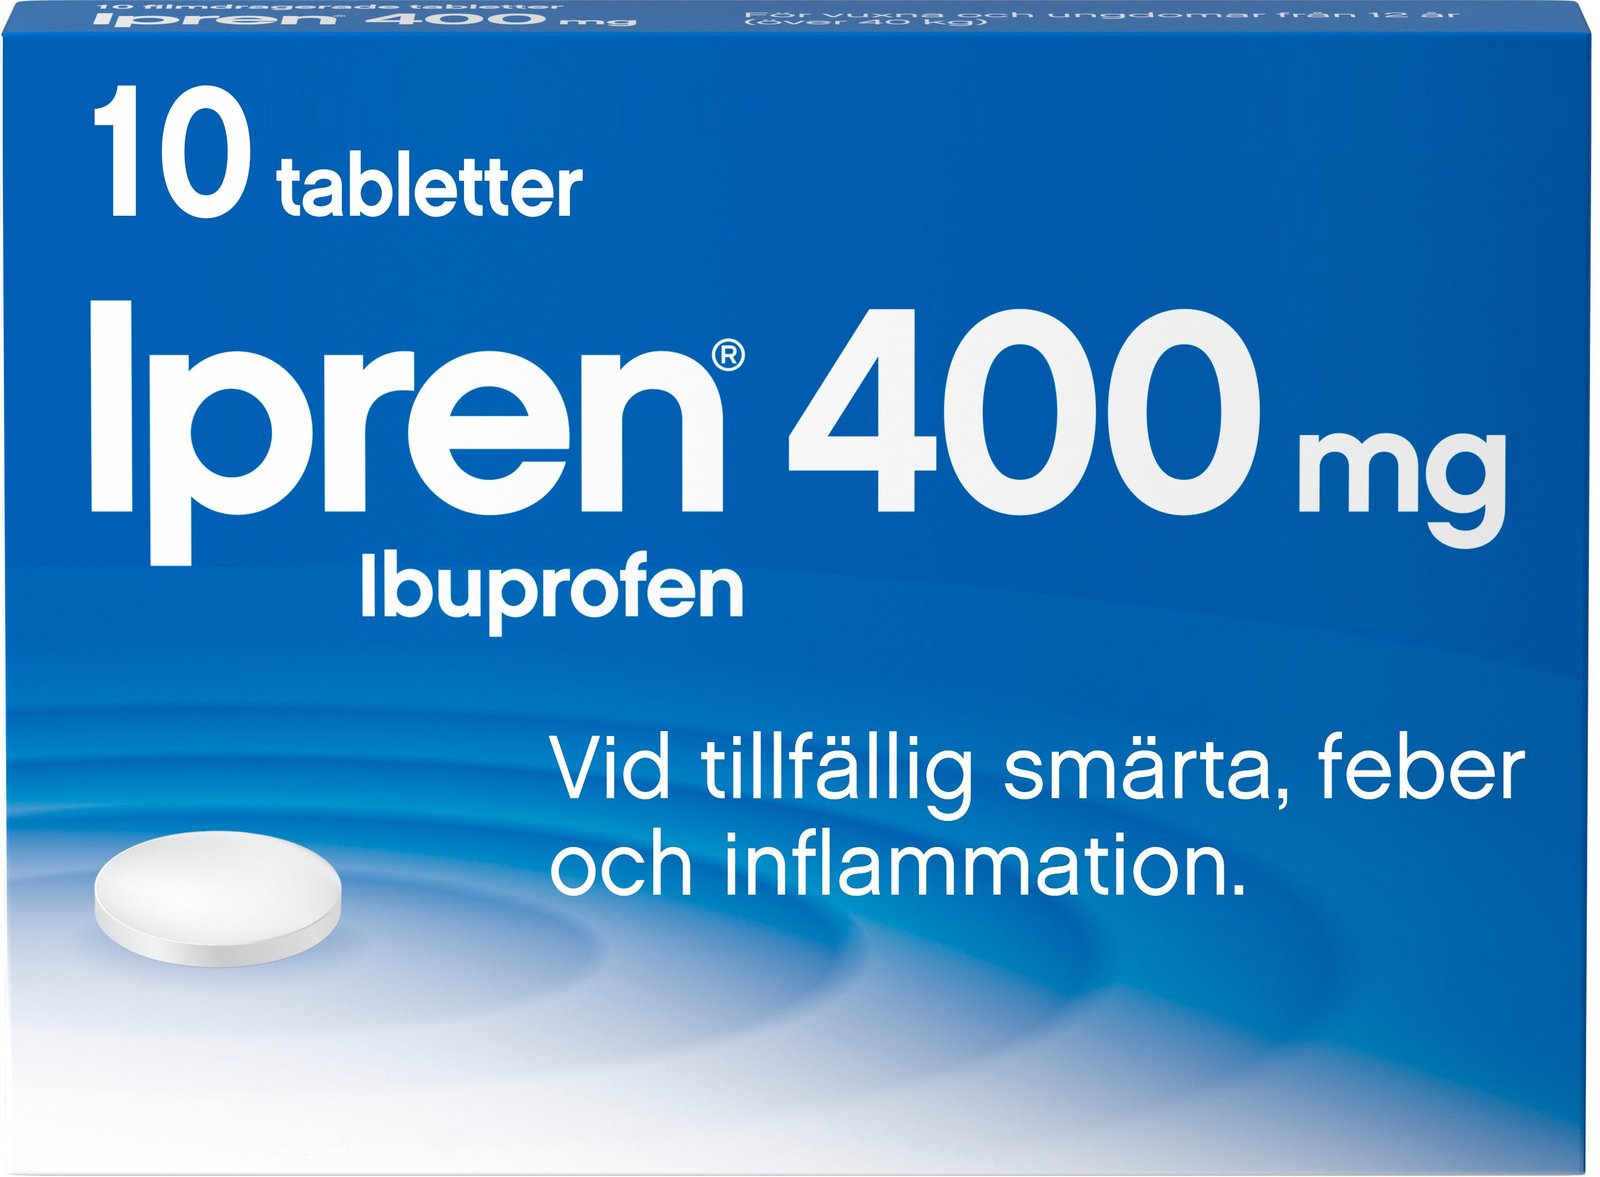 Ipren 400mg Ibuprofen 10 tabletter